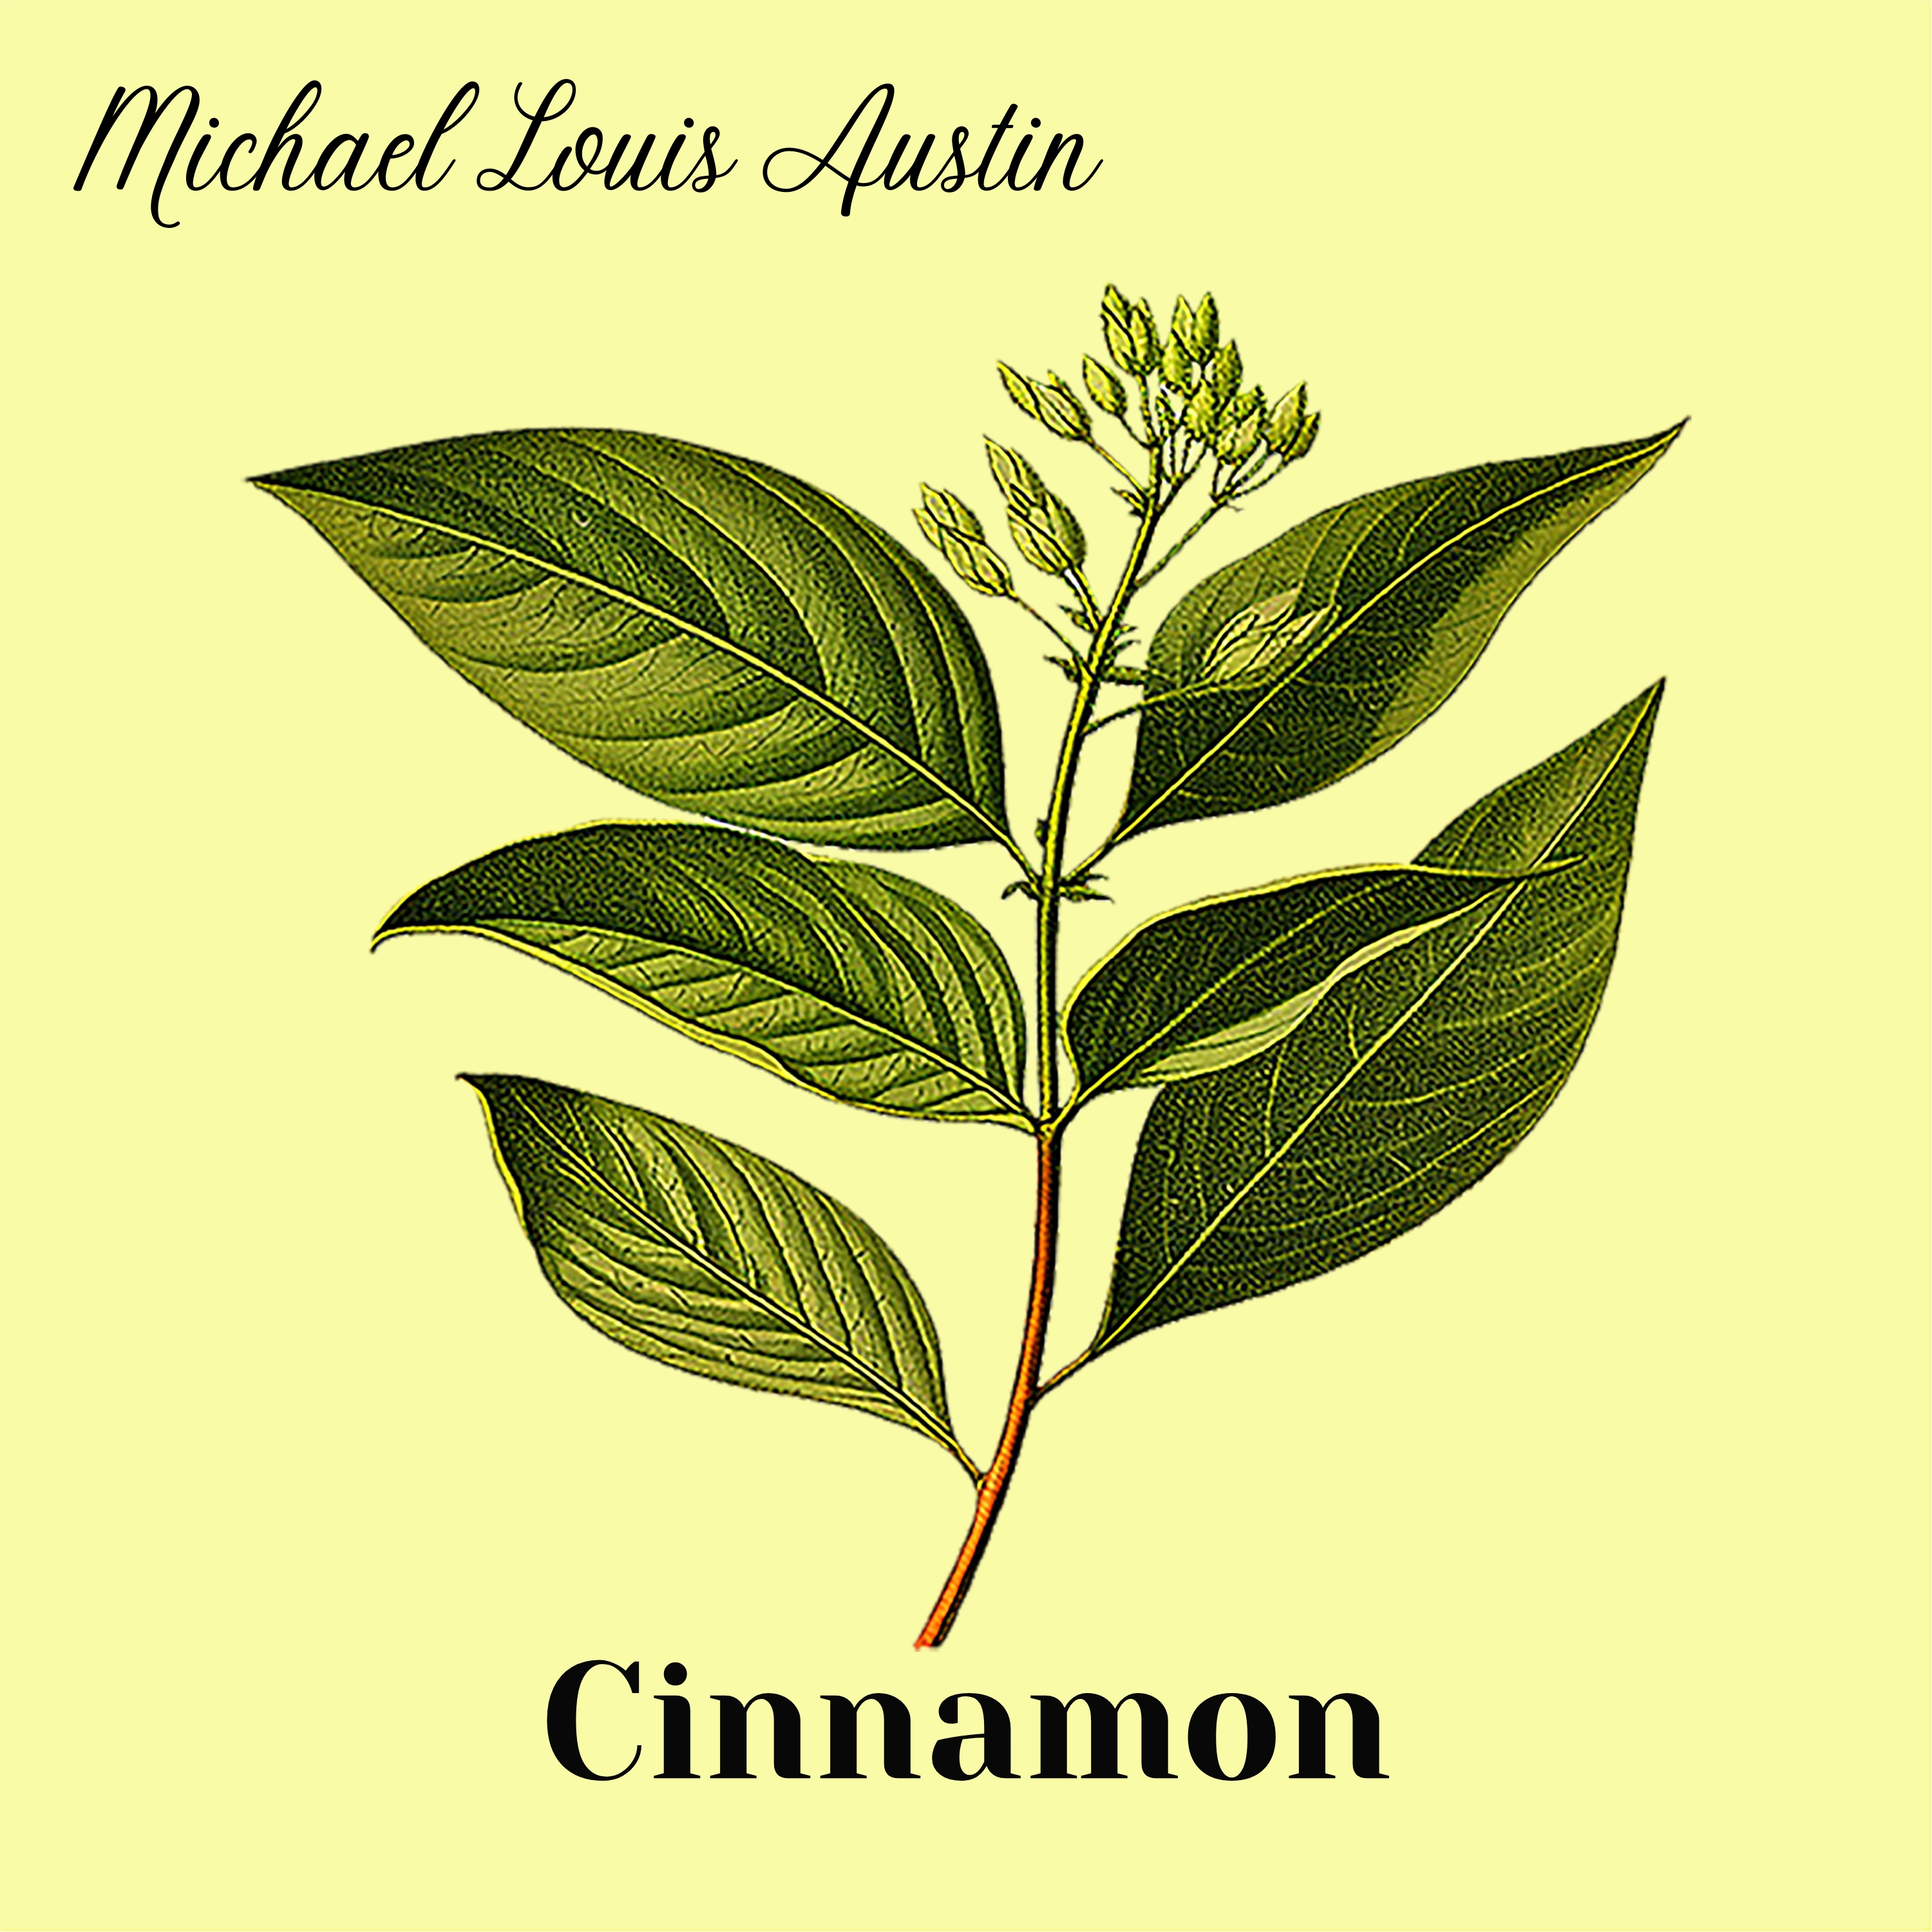 Michael Louis Austin – “Cinnamon”